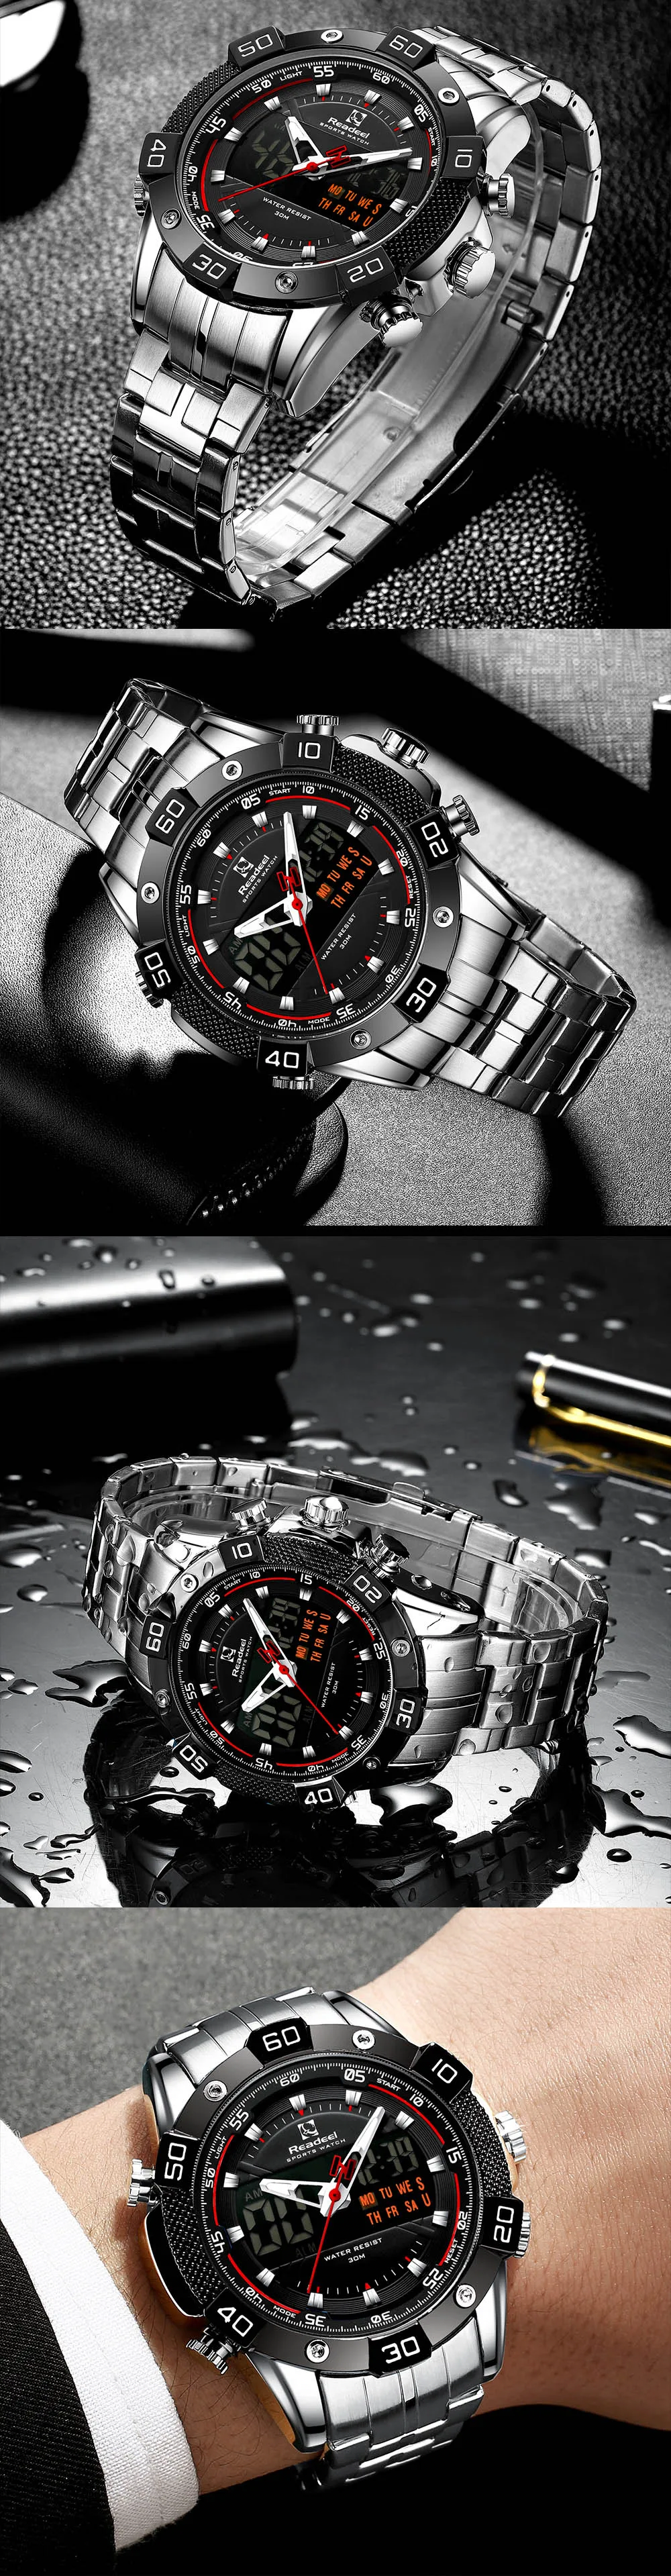 H47102744525c41408dc4826e4d8ac157H 2020 Luxury Brand Waterproof Military Sport Watches Men Silver Steel Digital Quartz Analog Watch Clock Relogios Masculinos